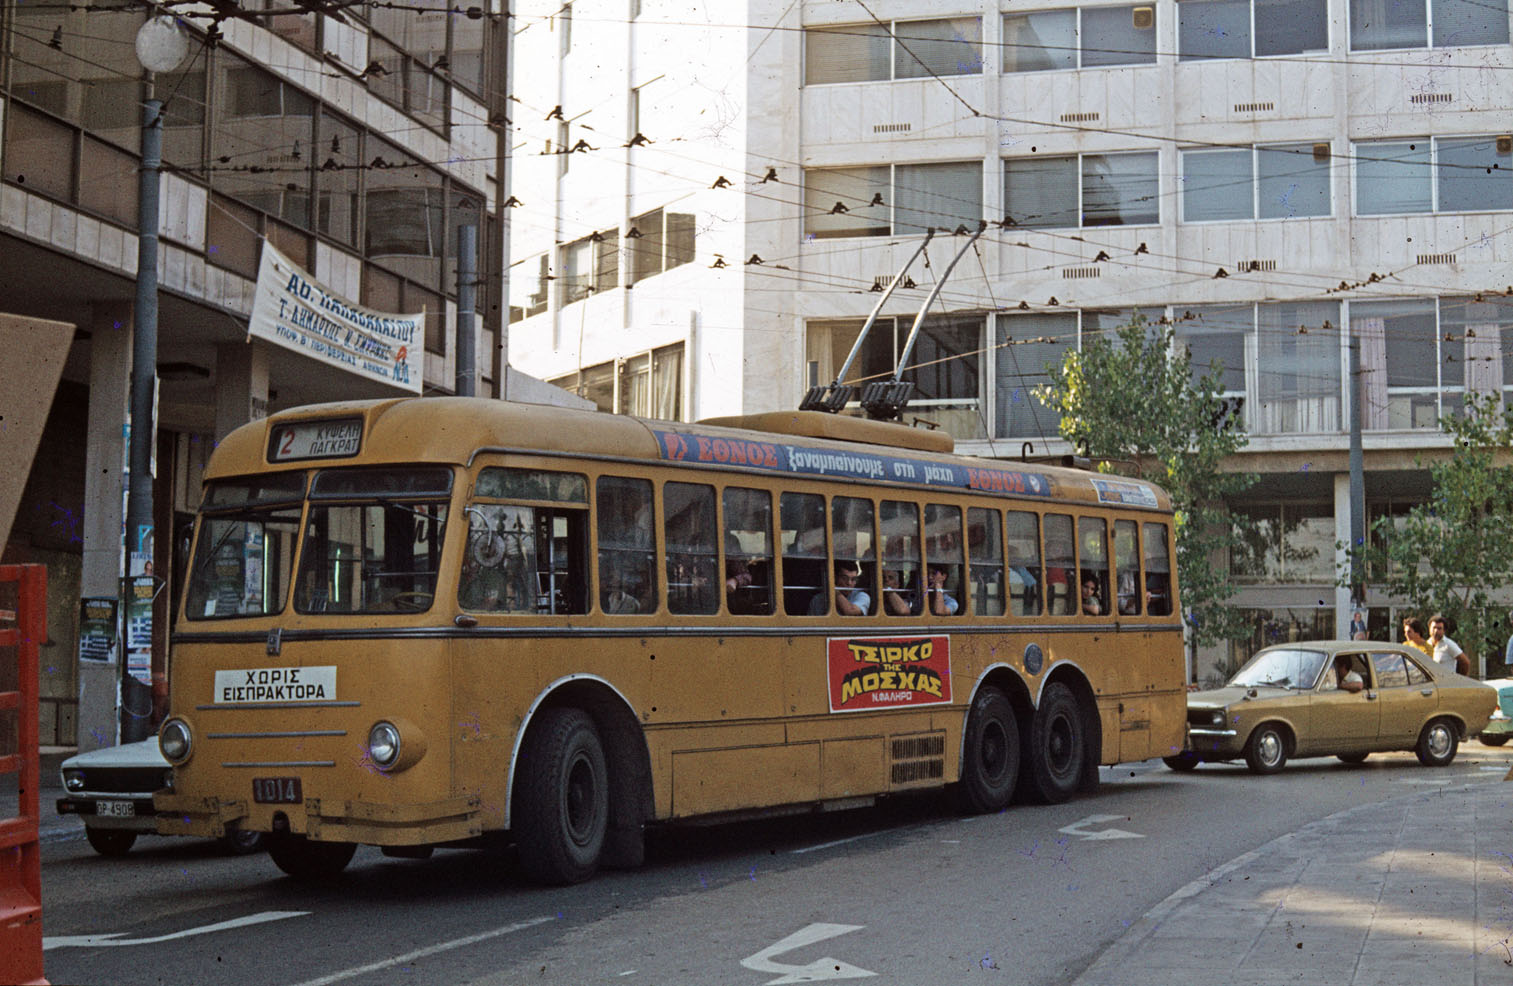 Ateena, Alfa Romeo 140 AF Casaro/CGE № 1014; Ateena — Trolleybuses — old photos